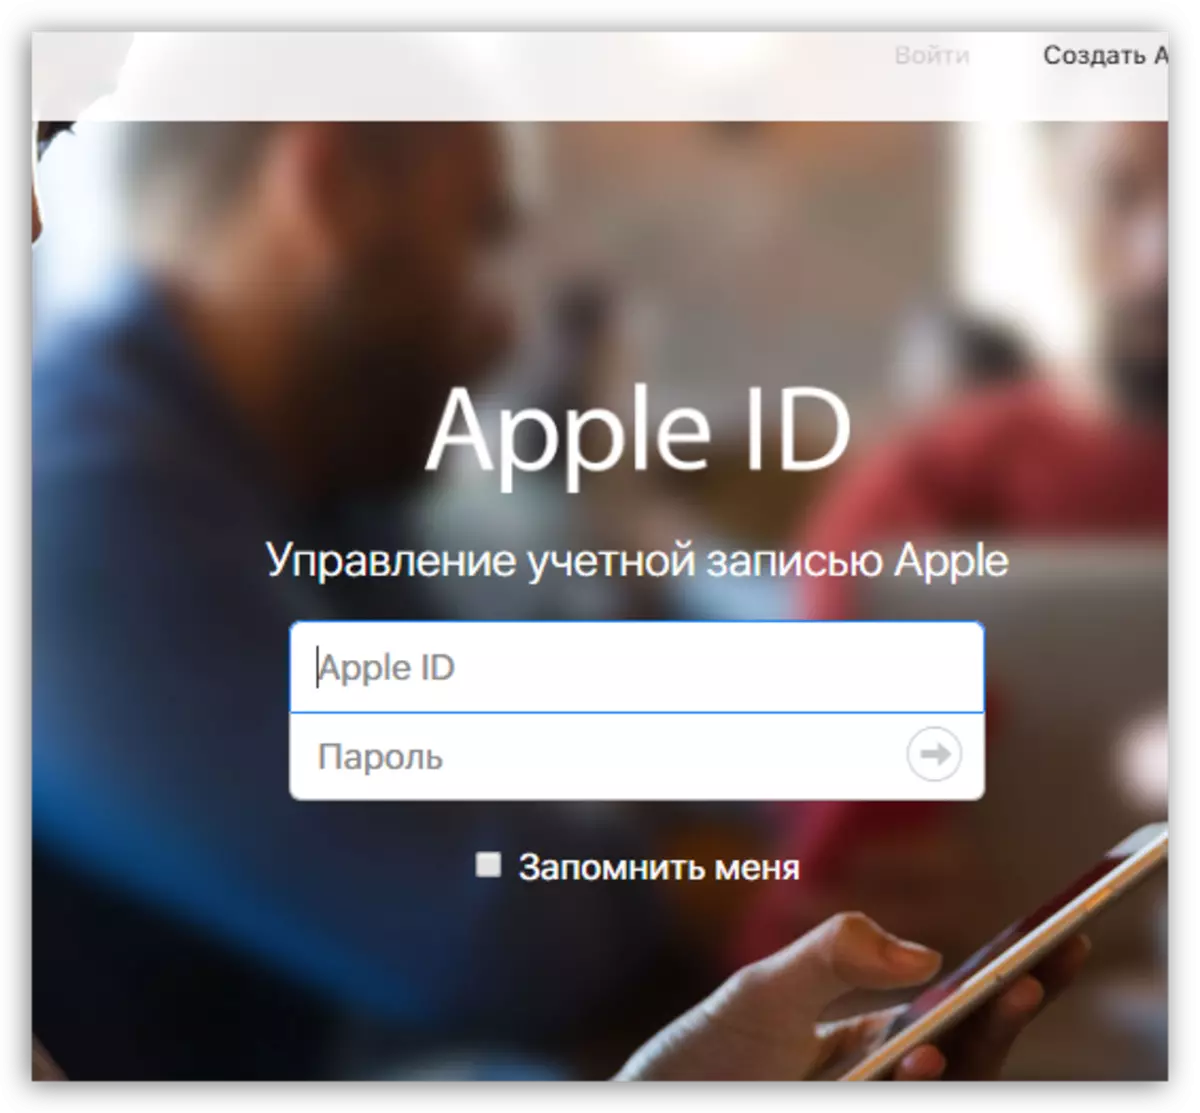 Apple IDの承認